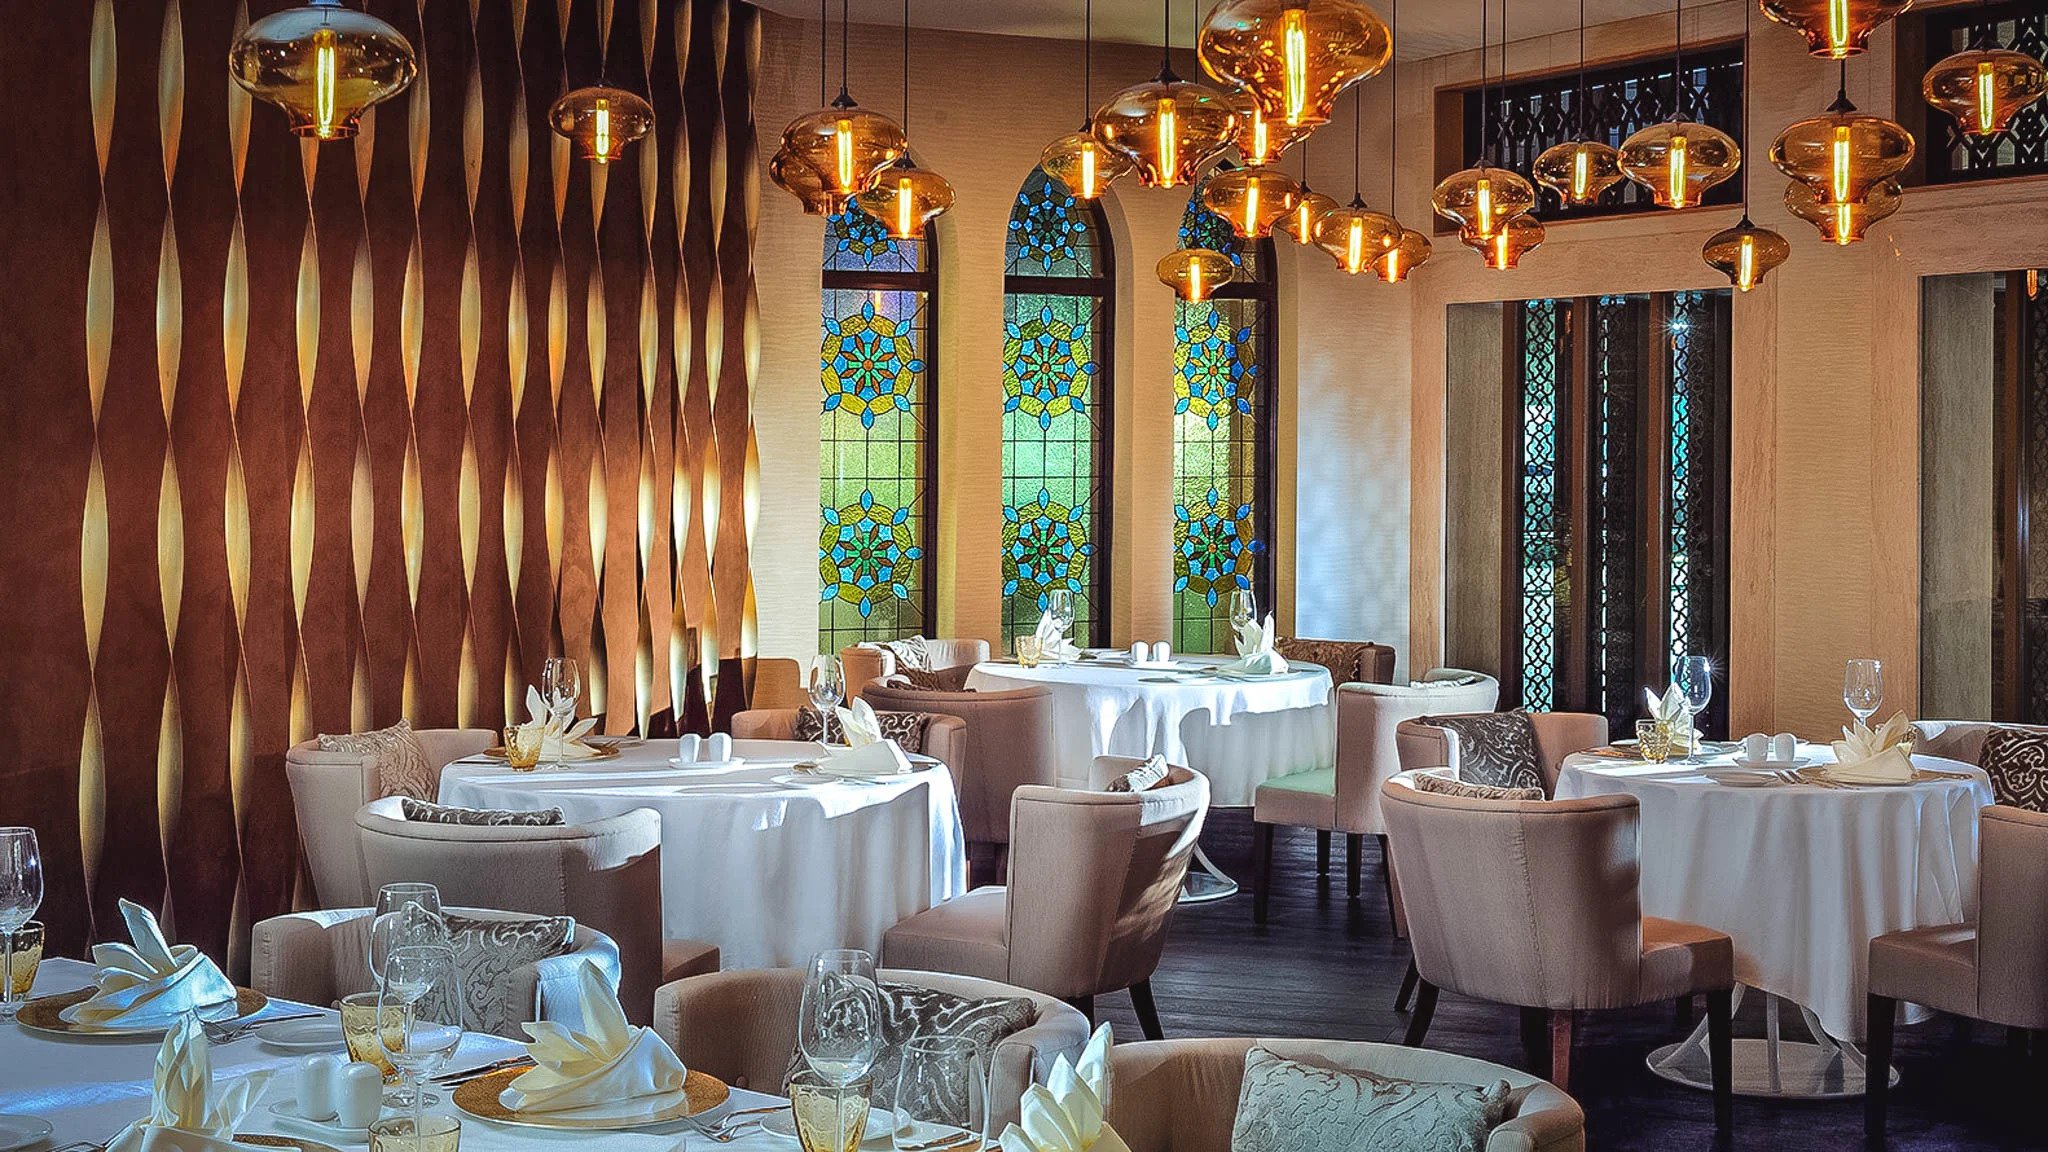 Restaurants in UAE